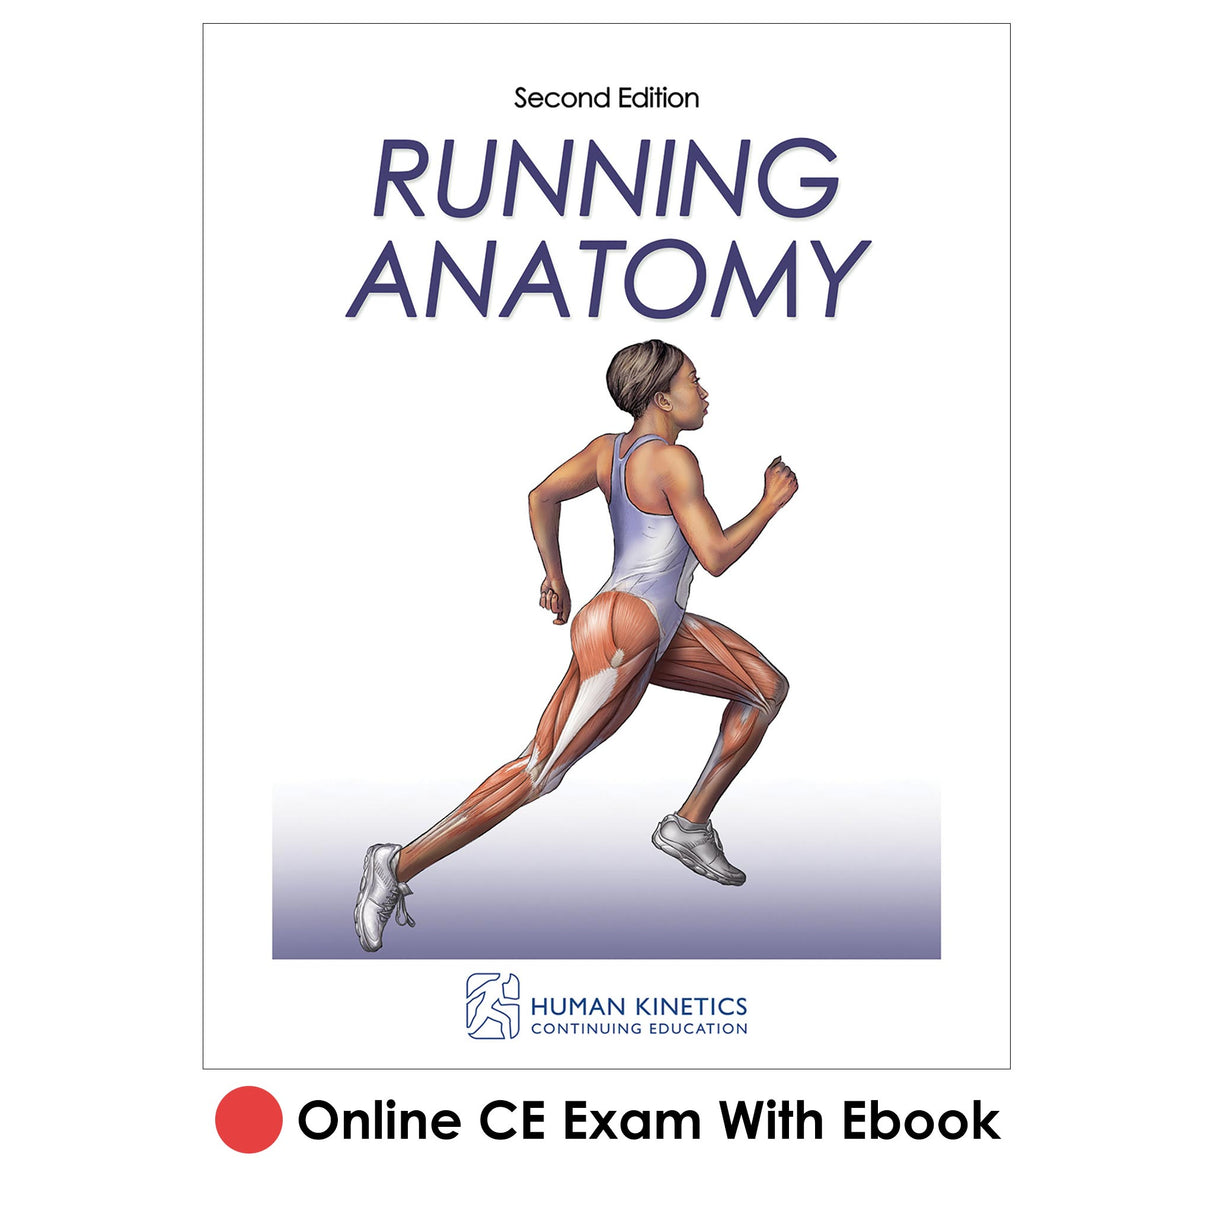 Running Anatomy 2nd Edition Online CE Exam With Ebook